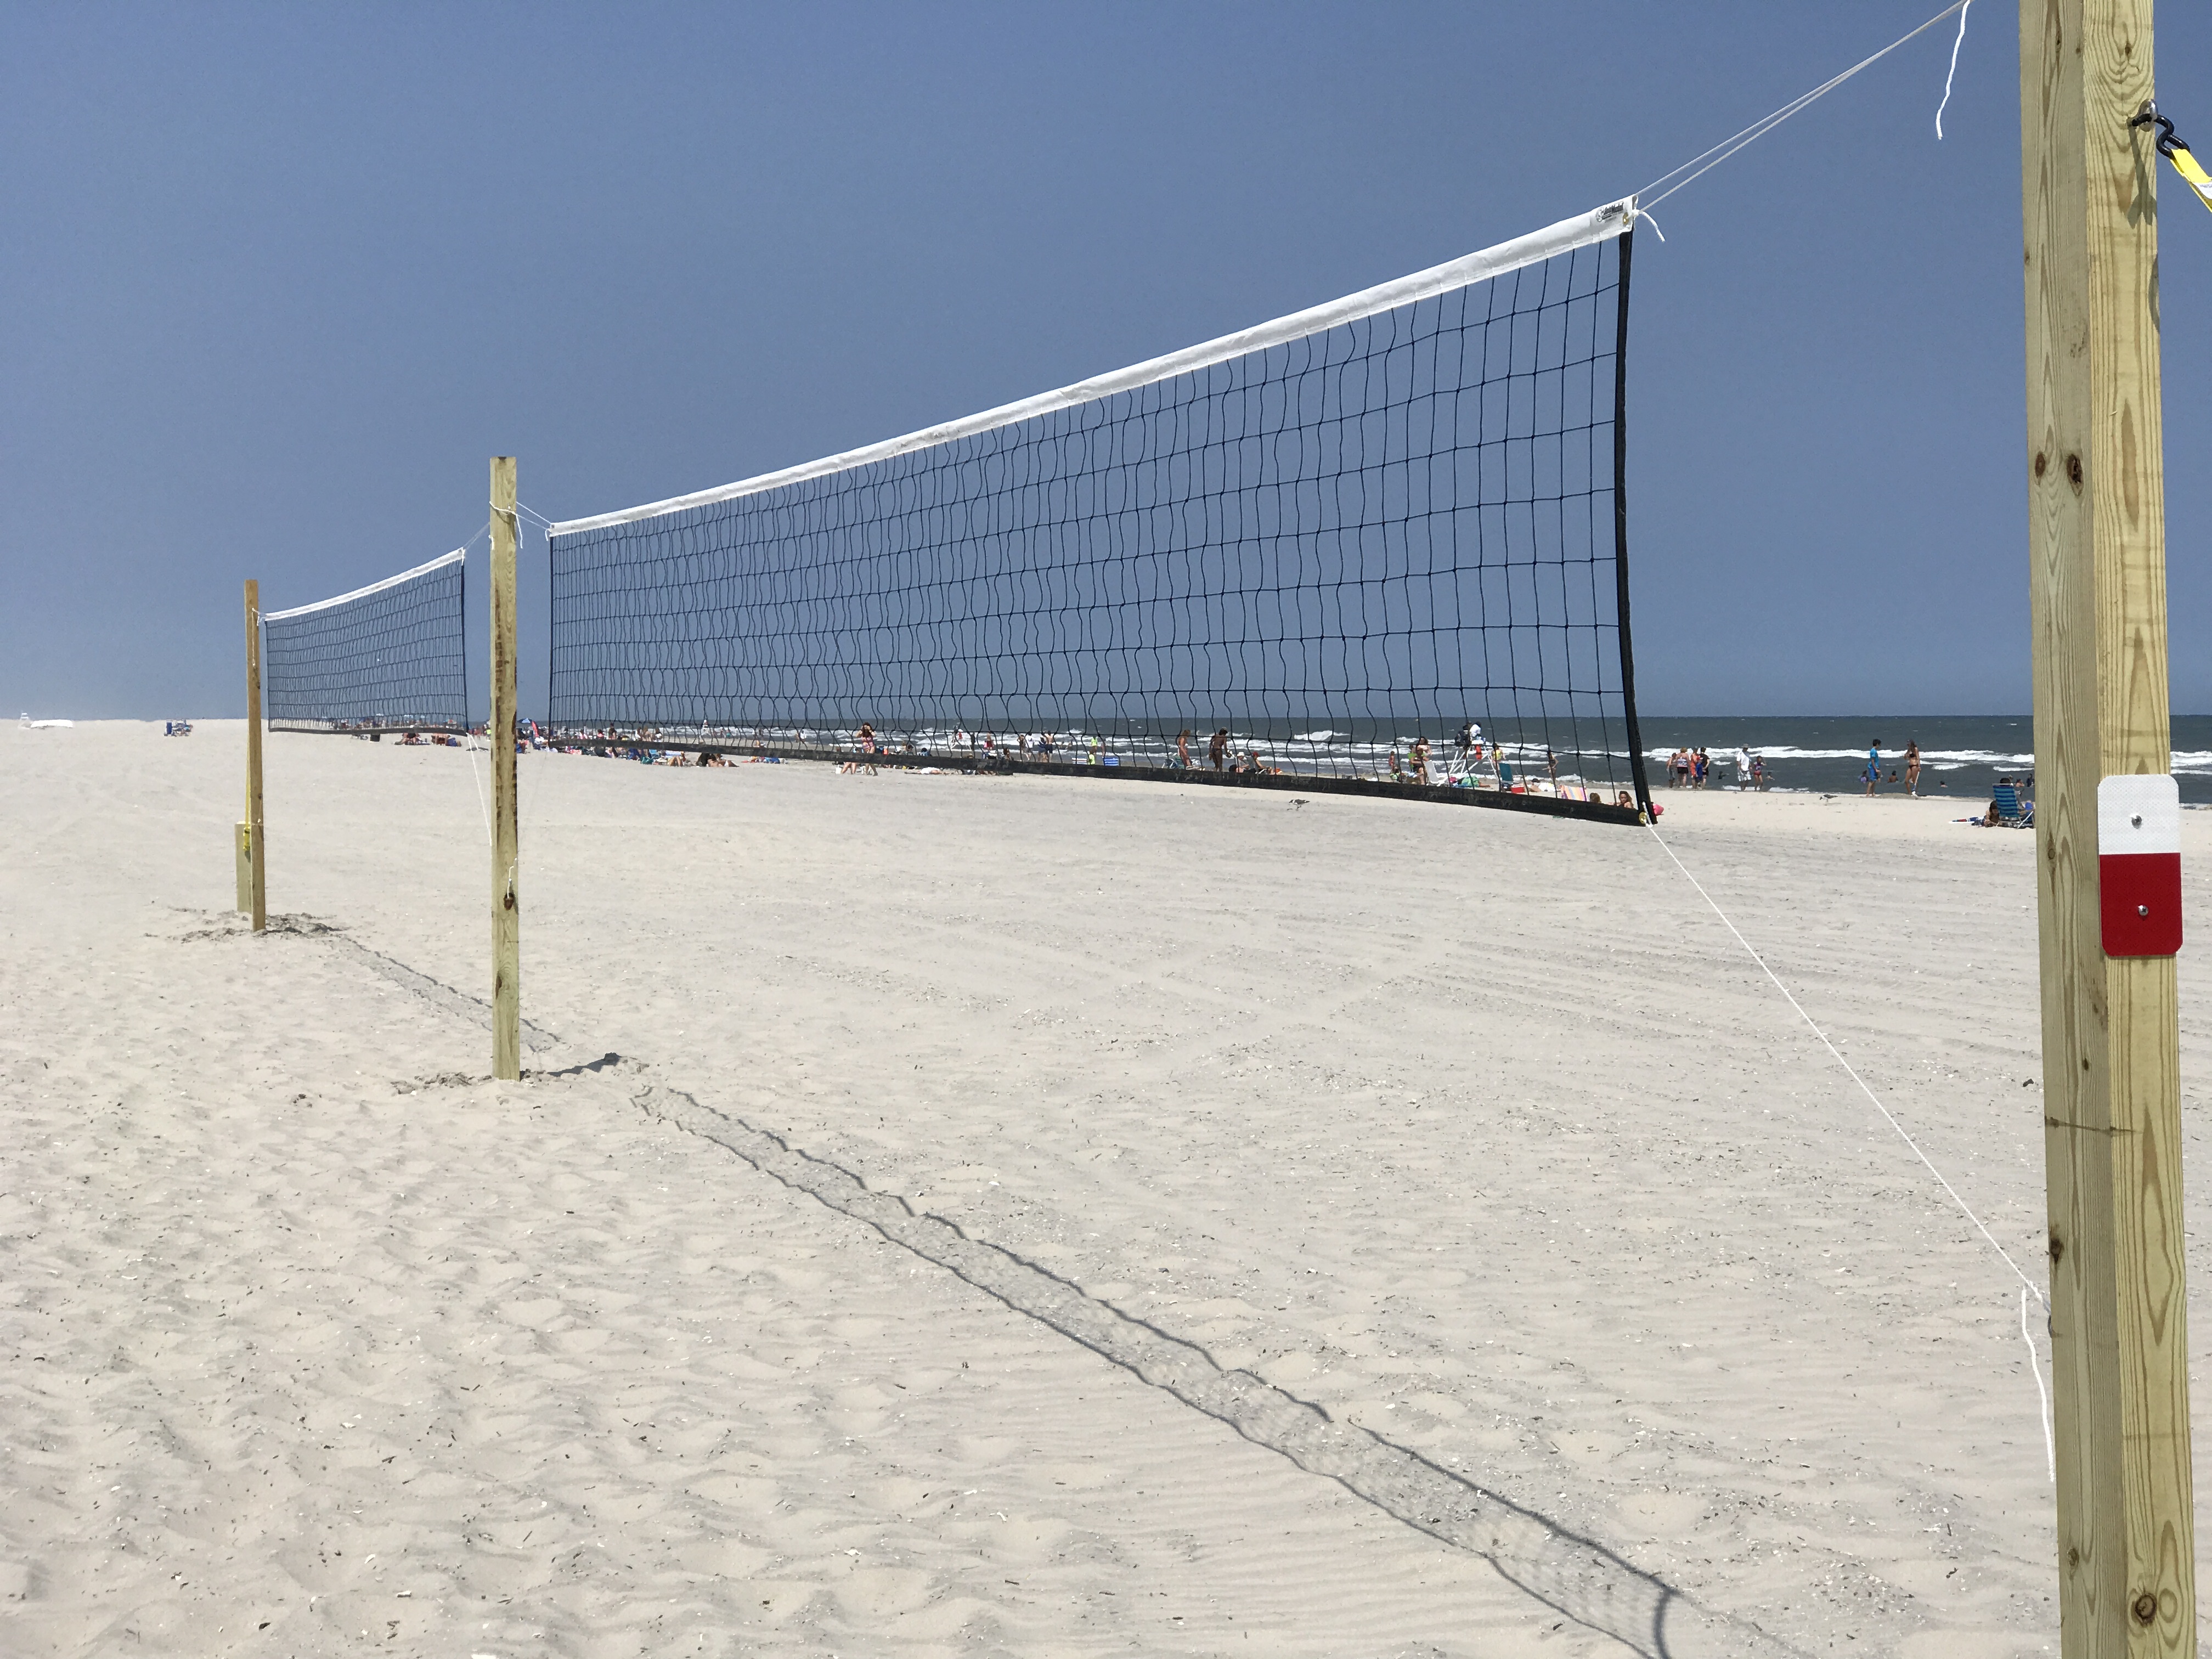 http://avalonboro.net/wp-content/uploads/2017/06/Avalon-Beach-Volleyball-Courts-2017.jpg